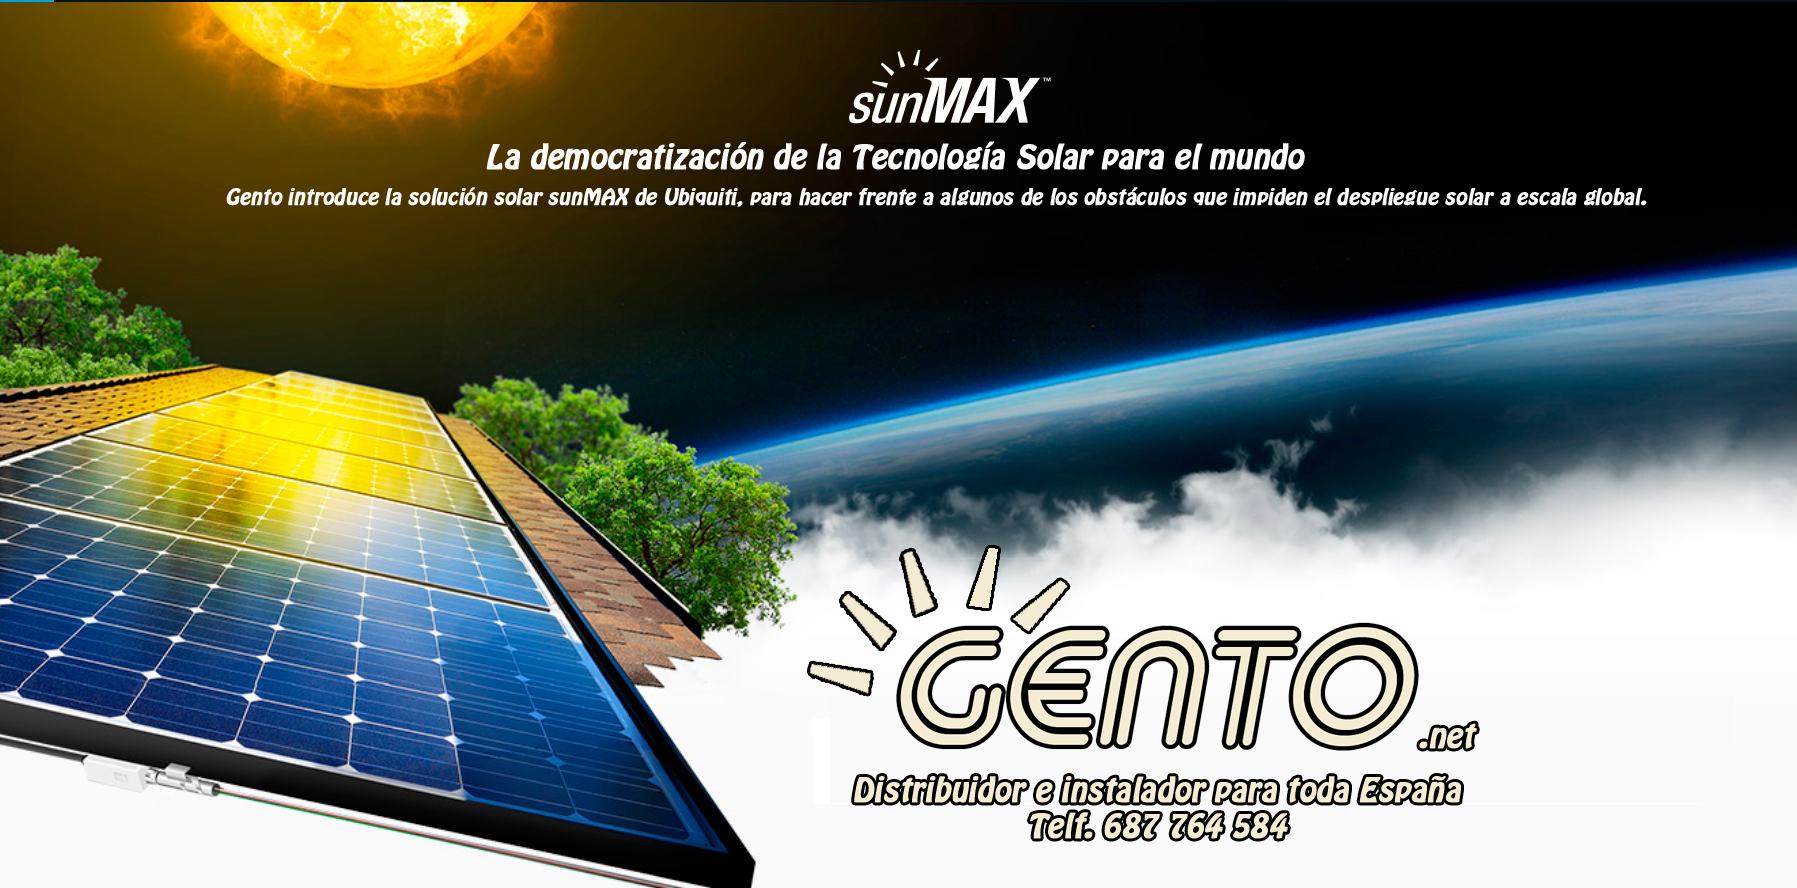 Gento sunMAX